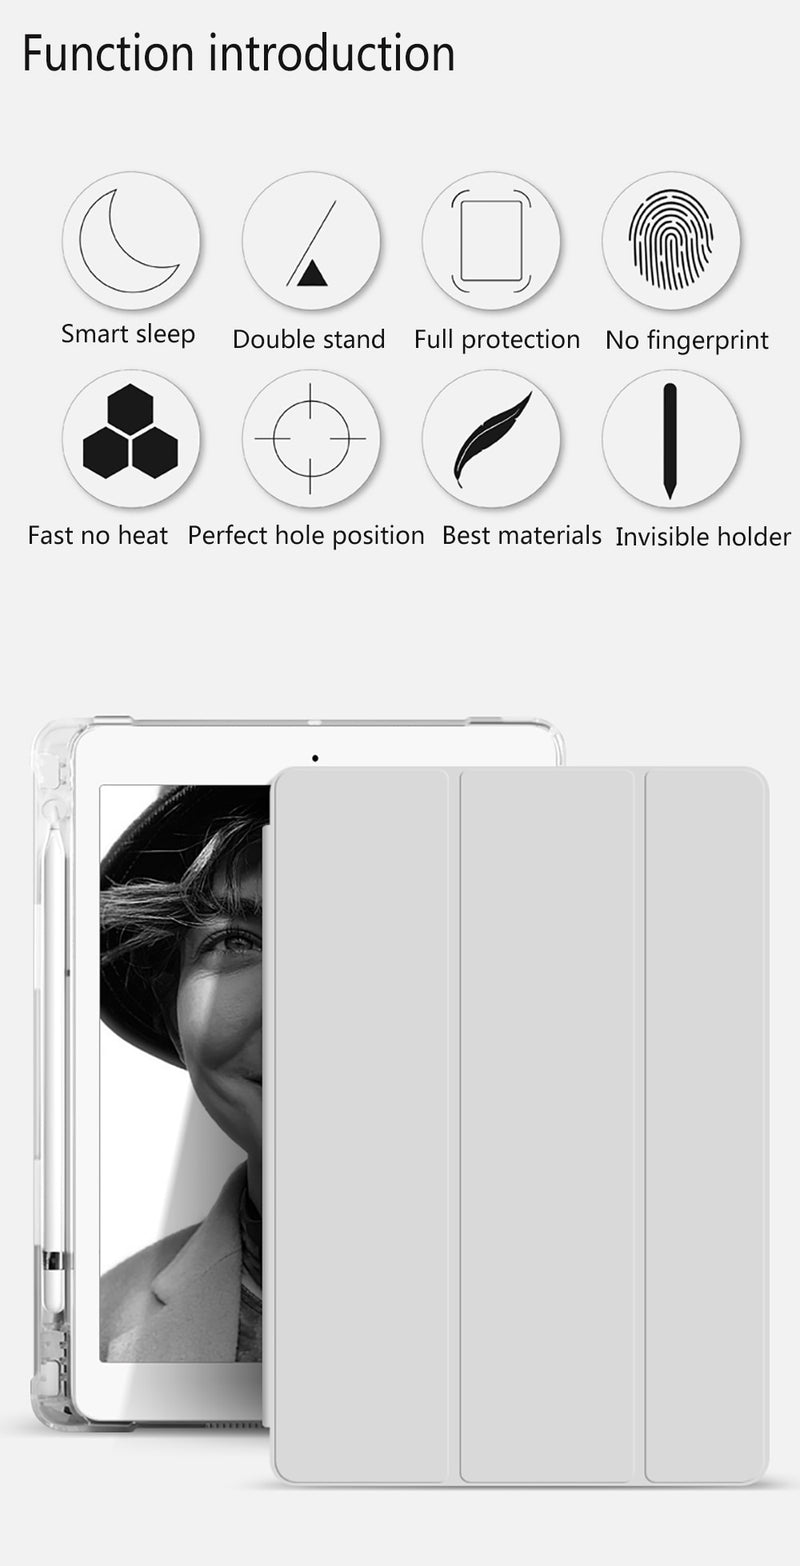 2020 Pro 12.9 4th iPad silicone case with pencil holder - KiwisLove